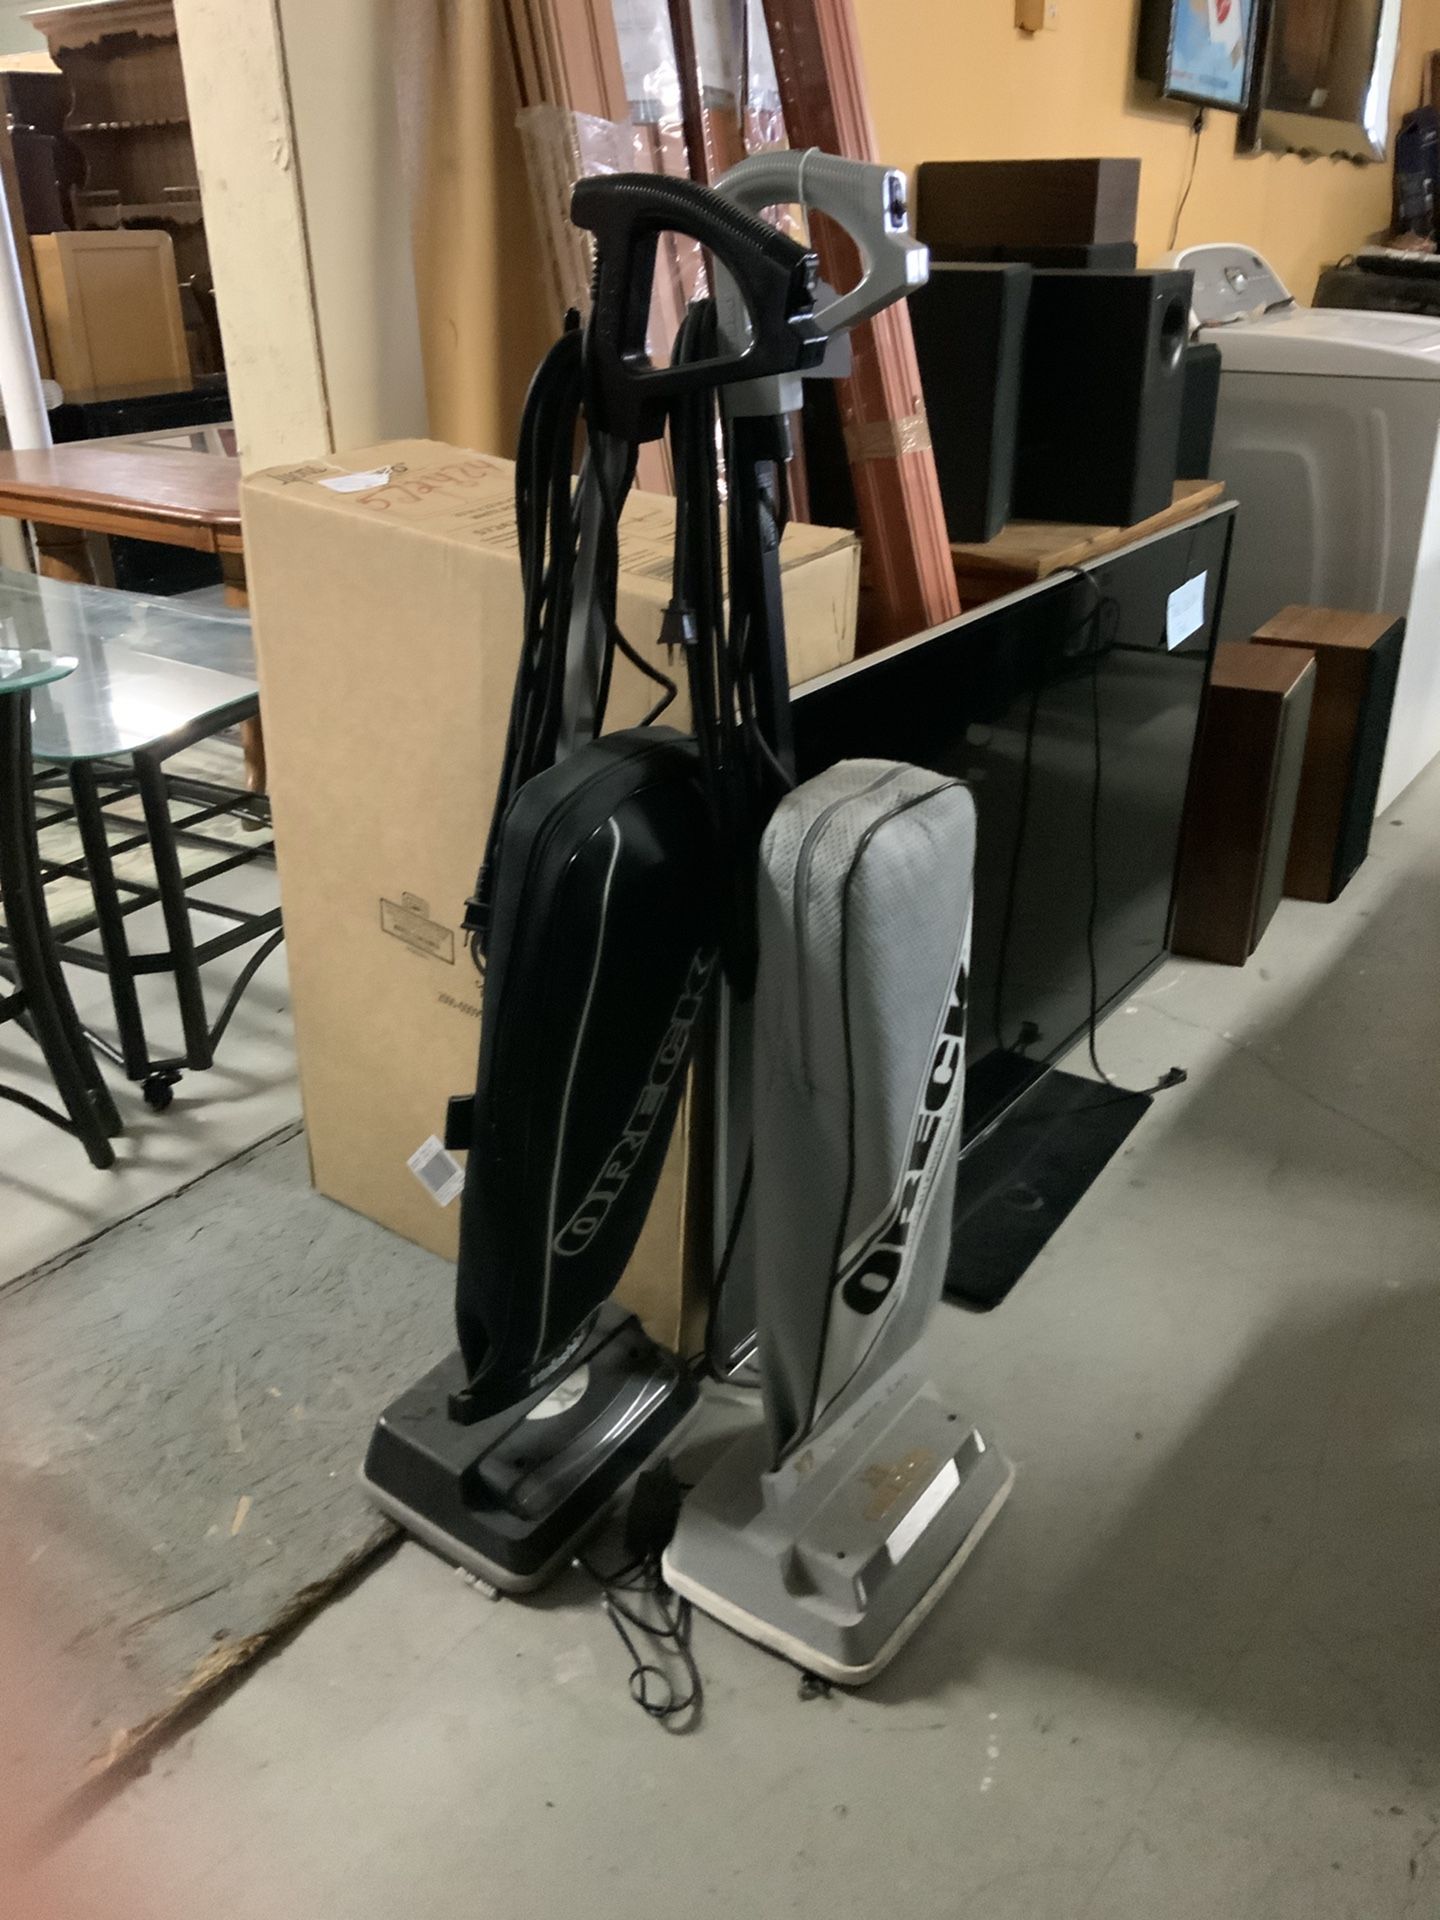 Oreck vacuums (sold separate)